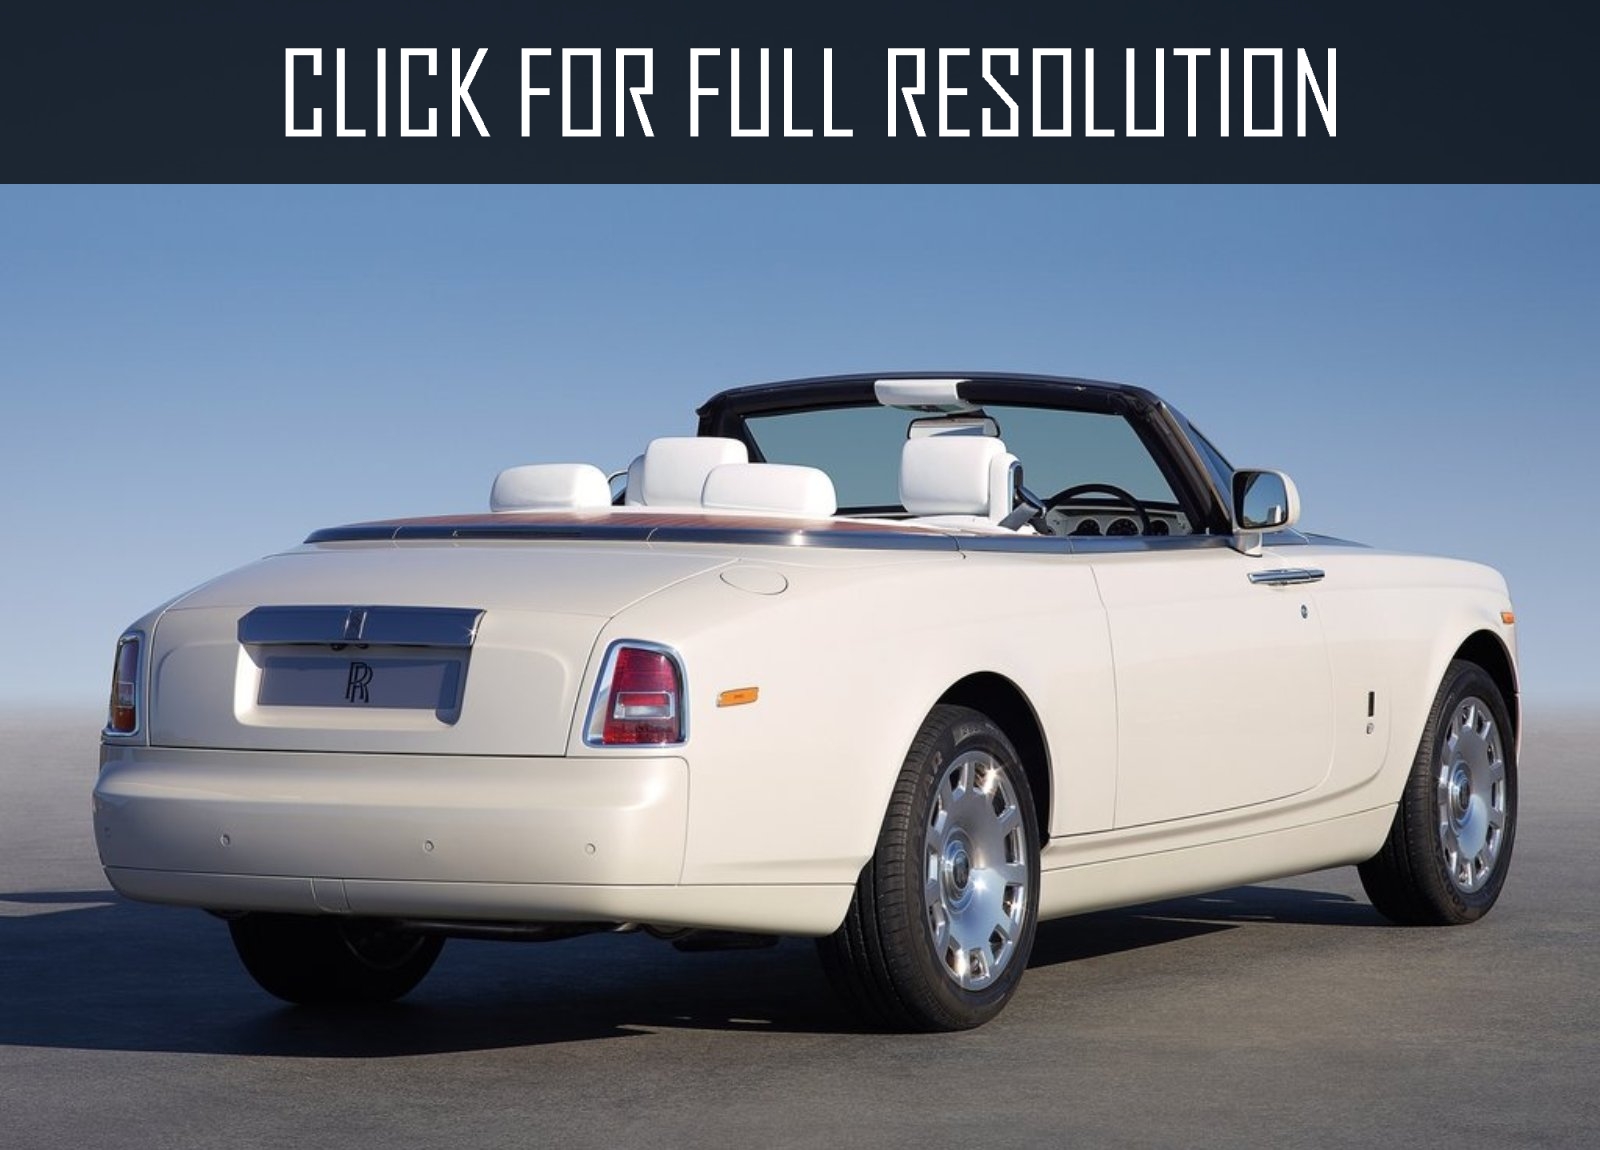 2013 Rolls Royce Phantom Drophead Coupe